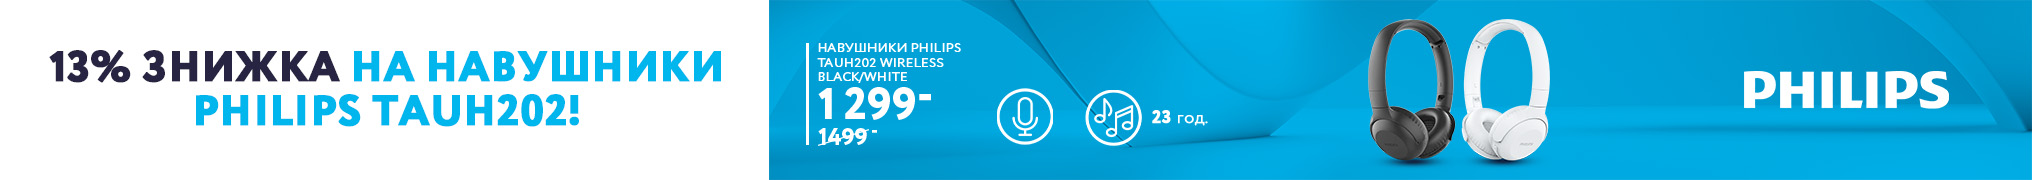 13% знижка на навушники Philips TAUH202!